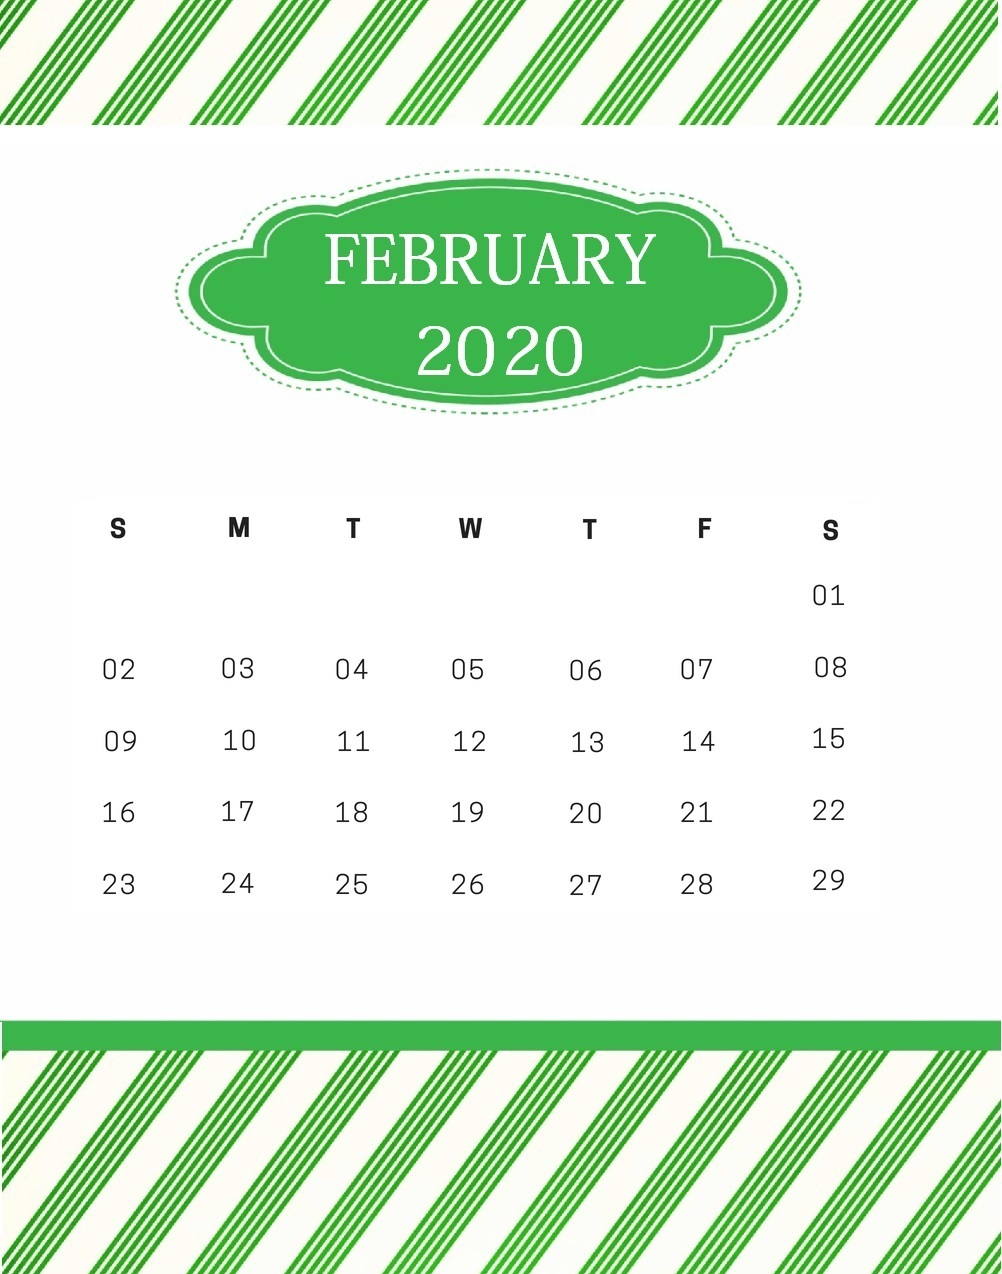 February 2020 Wall Calendar